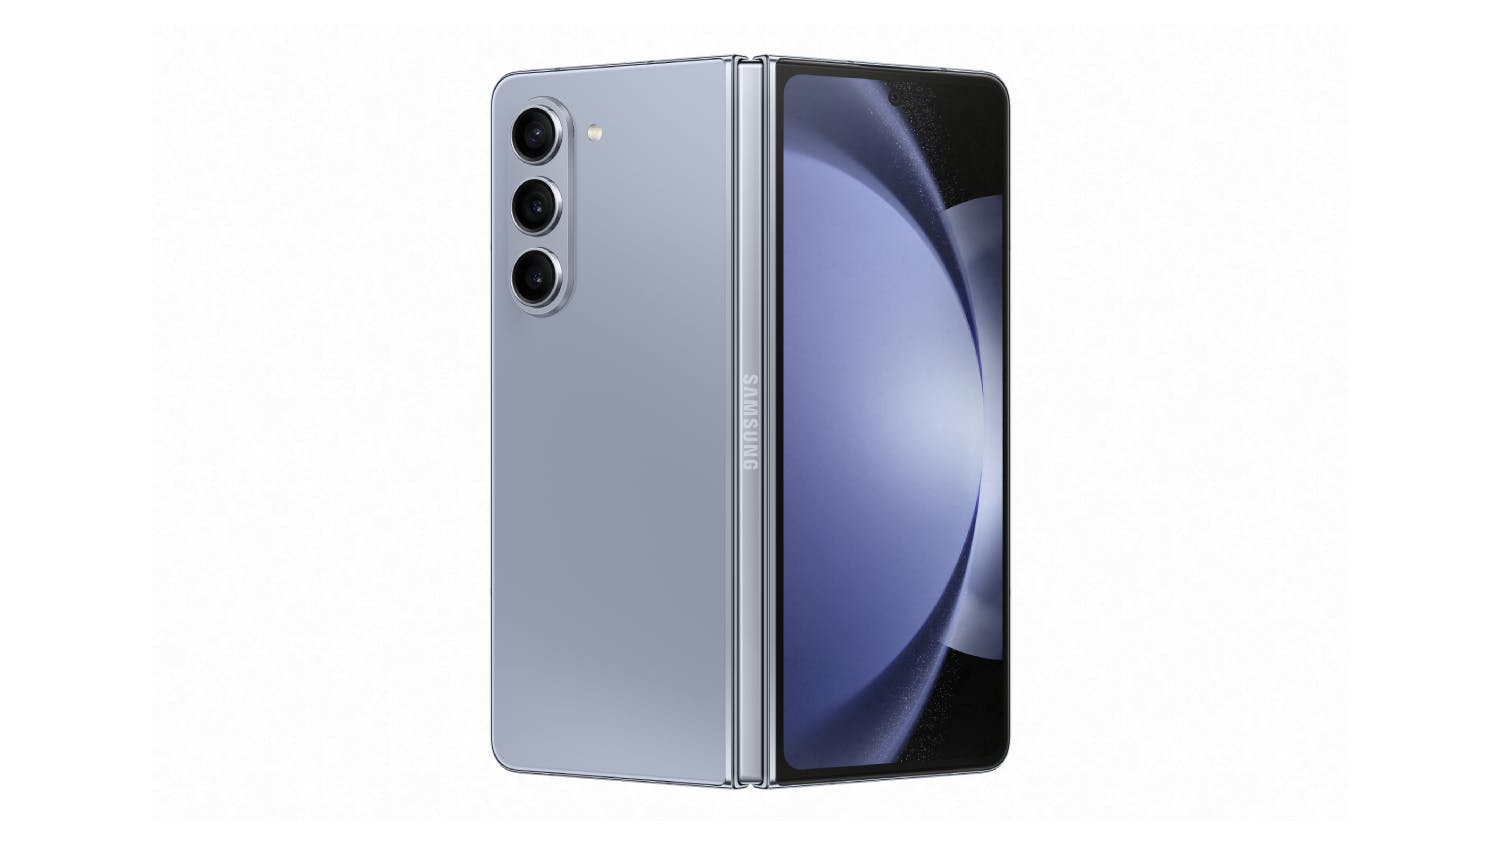 Samsung Galaxy Z Fold5 5G 256GB Smartphone - Icy Blue (One NZ/Open Network)